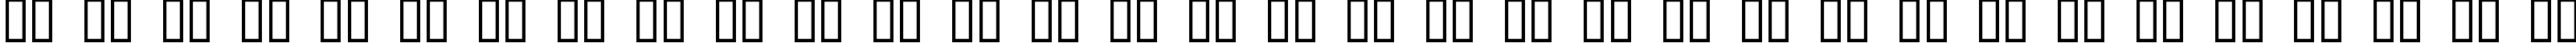 Пример написания русского алфавита шрифтом BlueStone